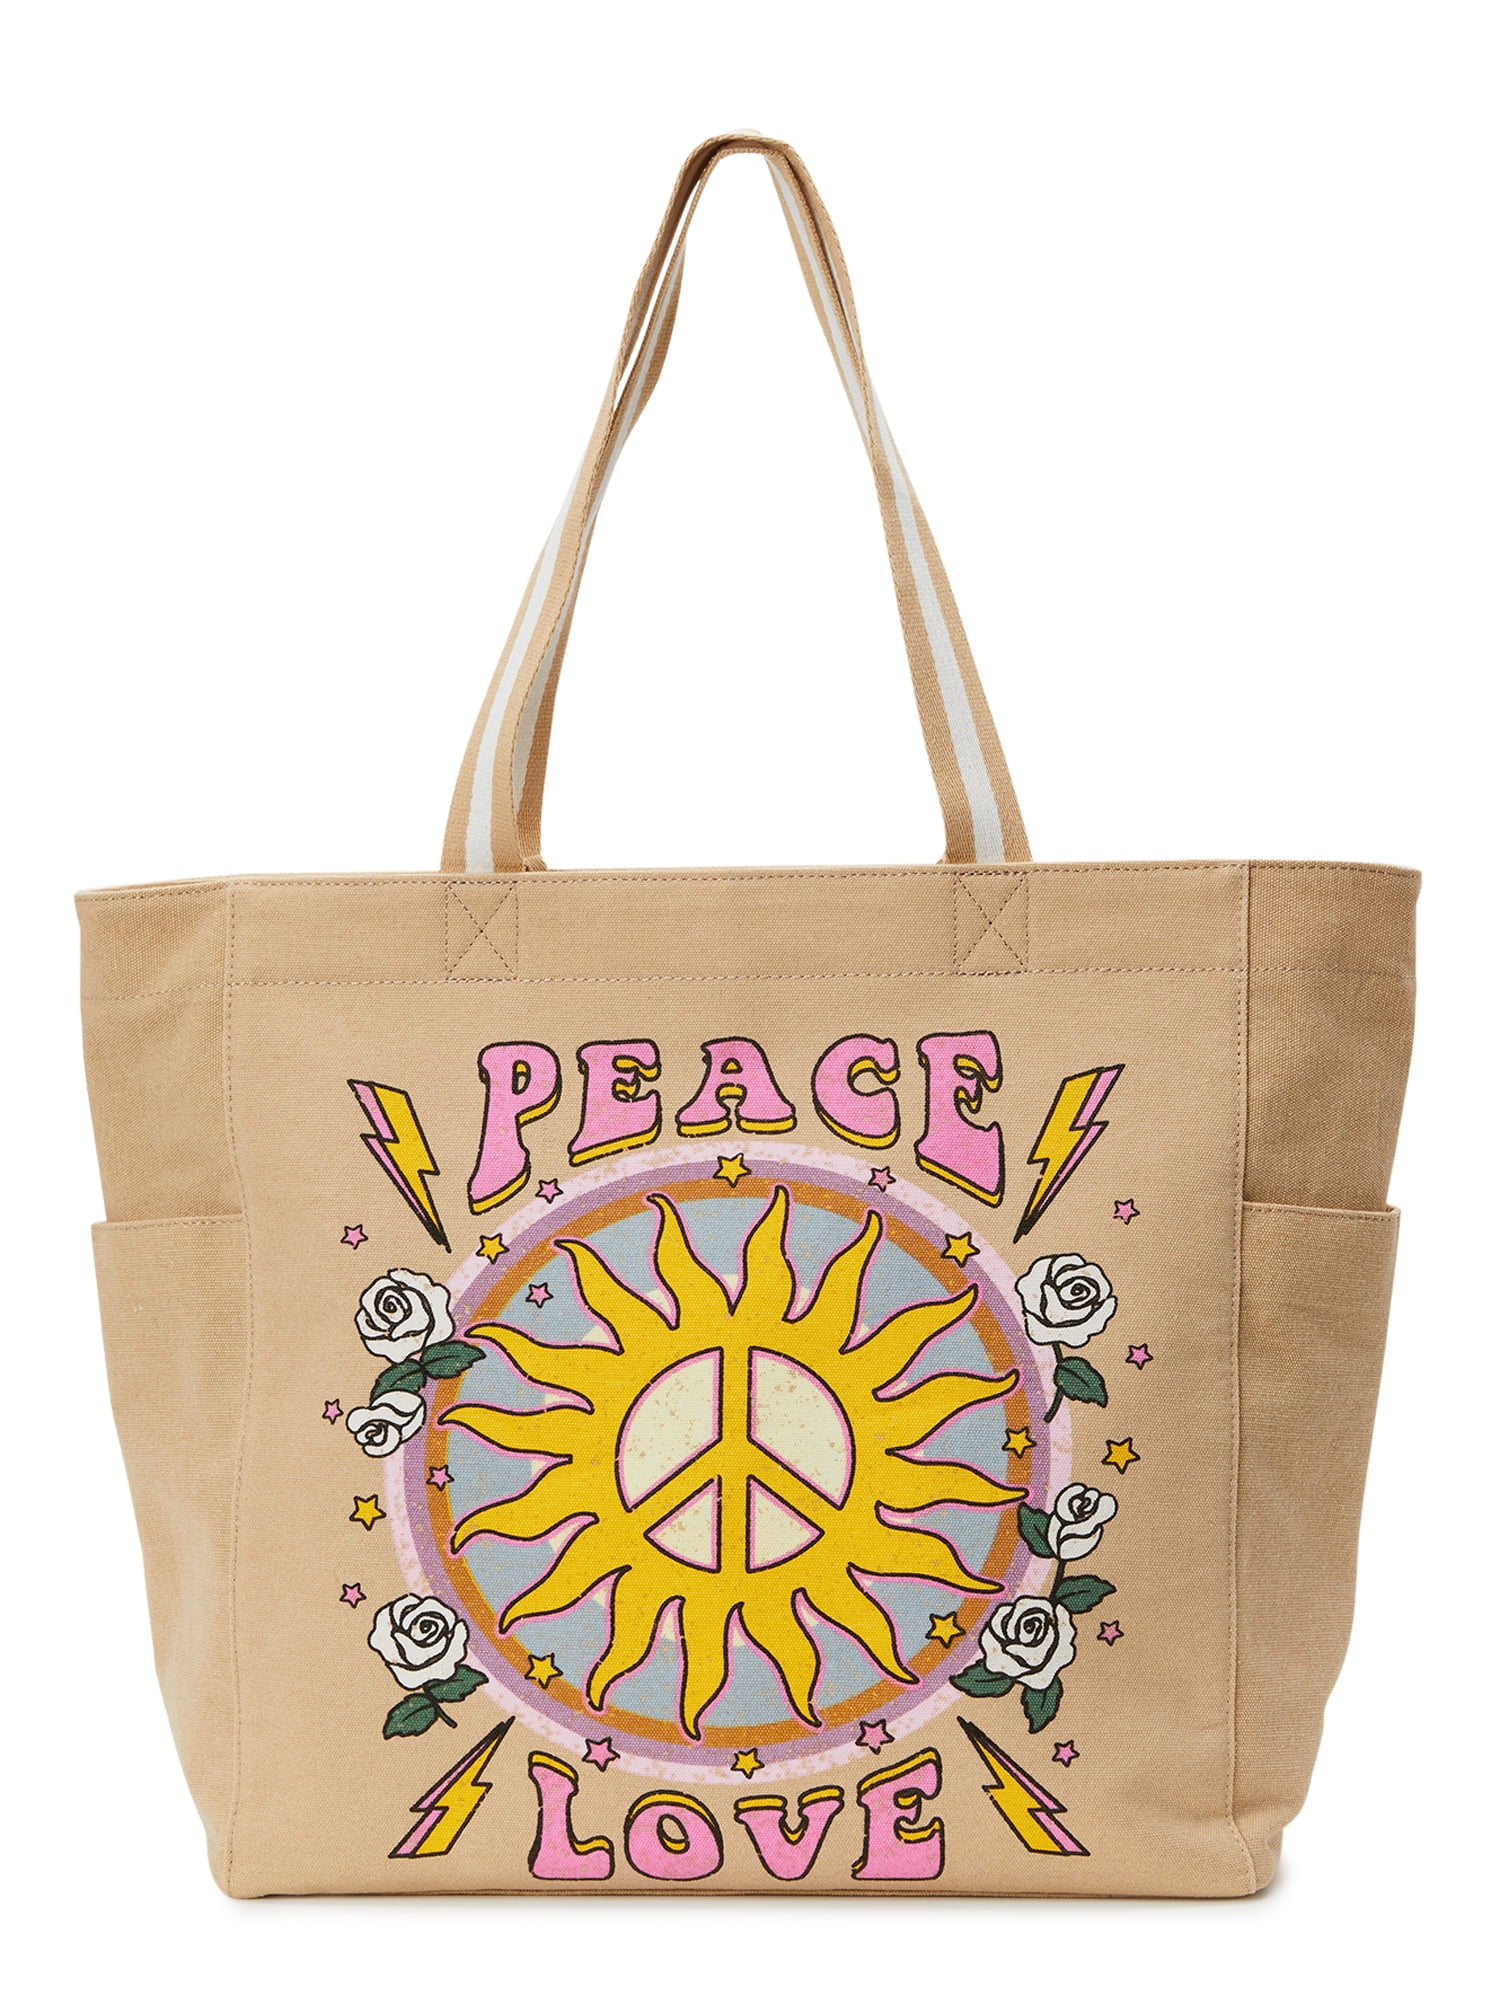 PEACE AND LOVE CANVAS TOTE BAG Natural – Bodega